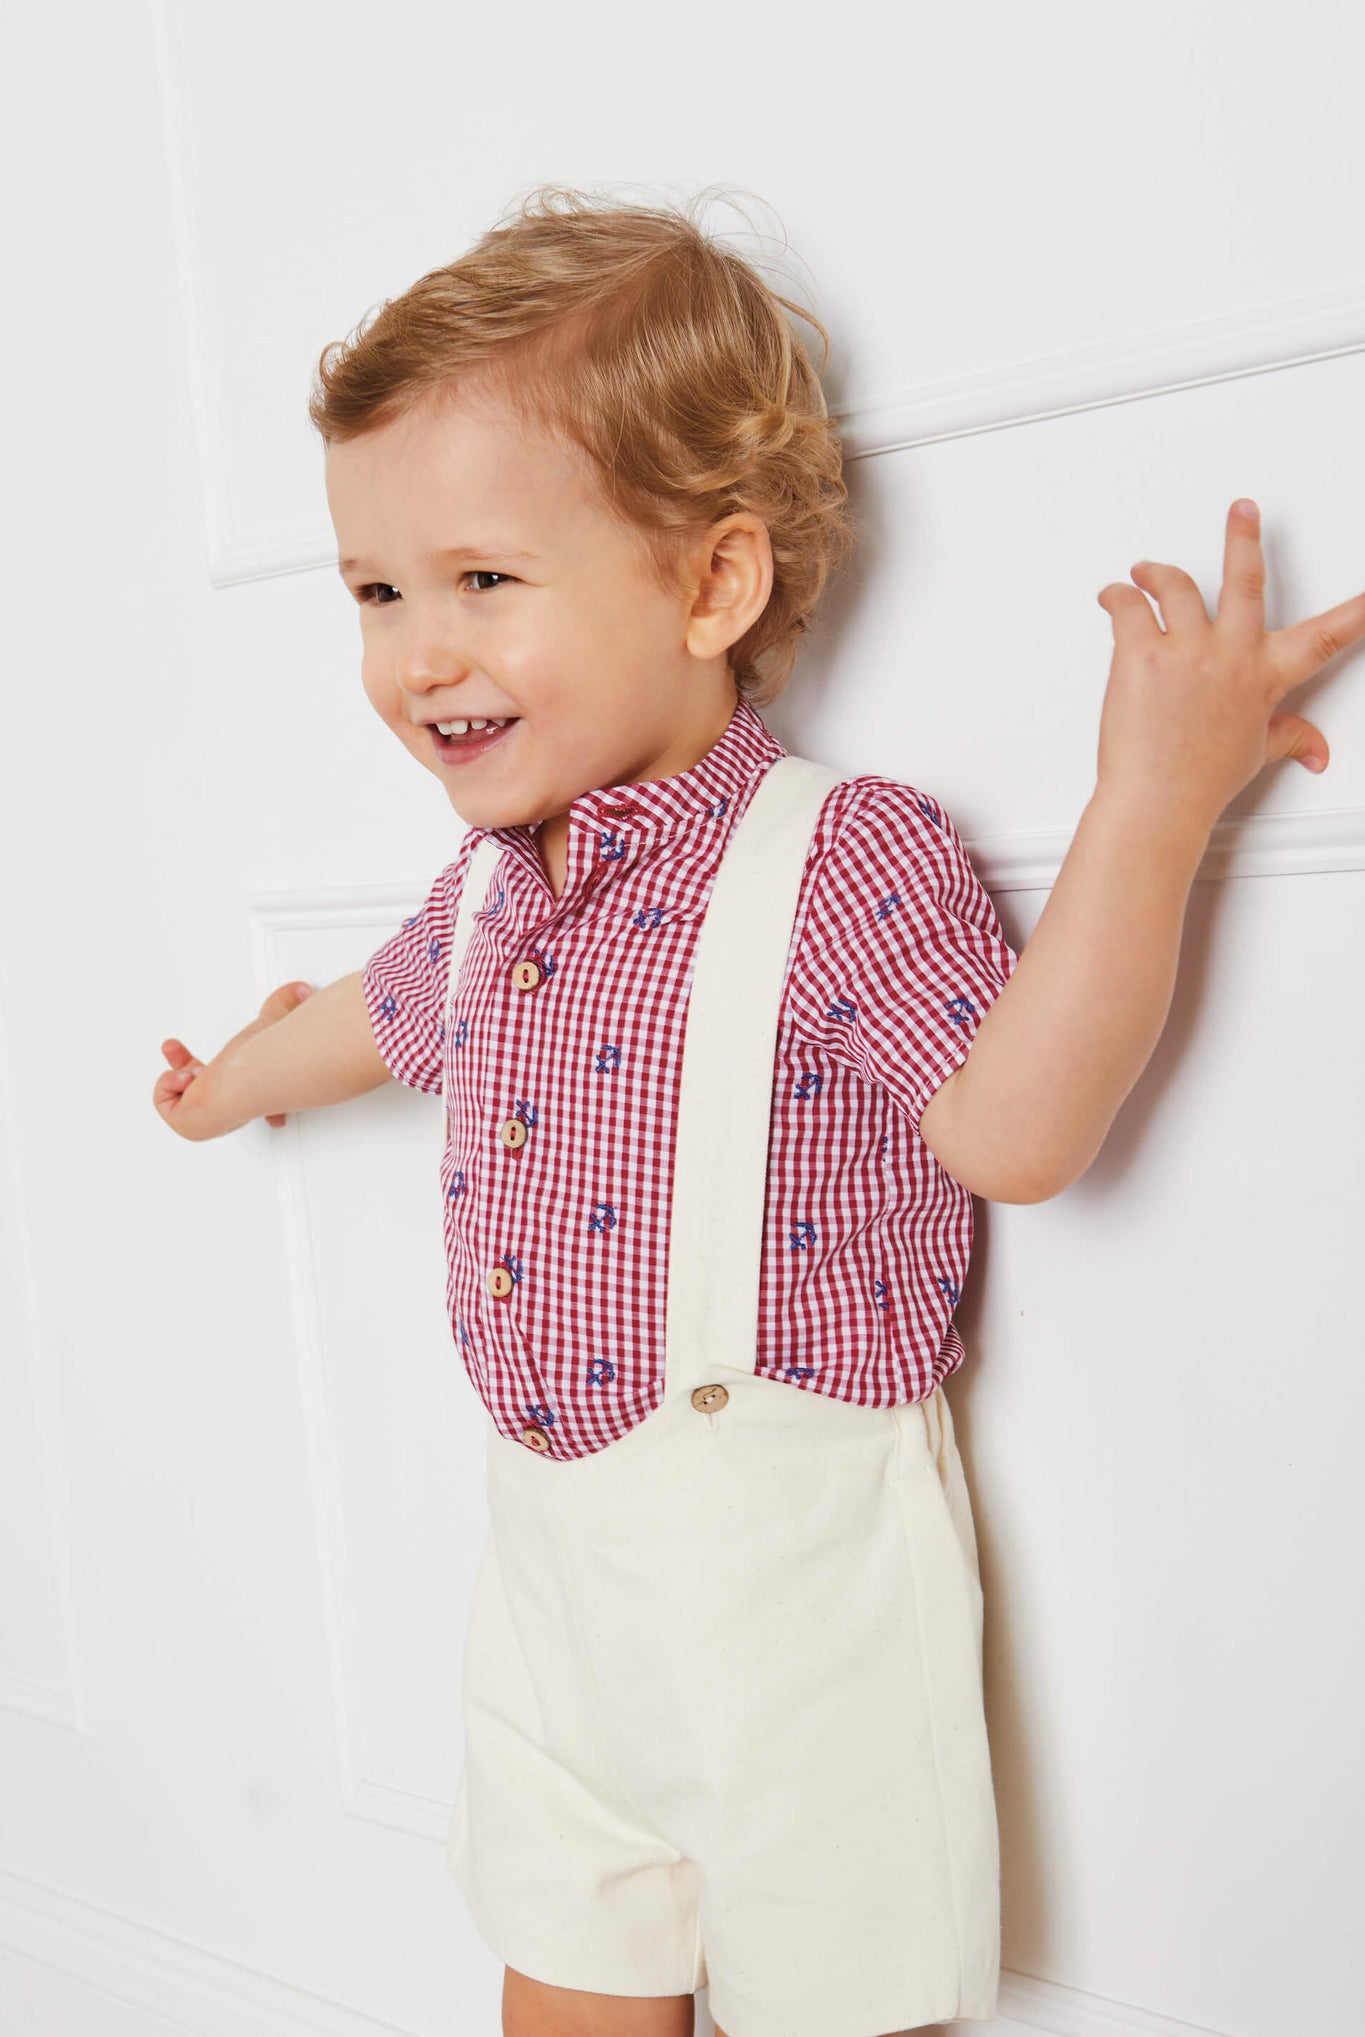 Baby Boy Classic Clothes Lookbook | Pepa London